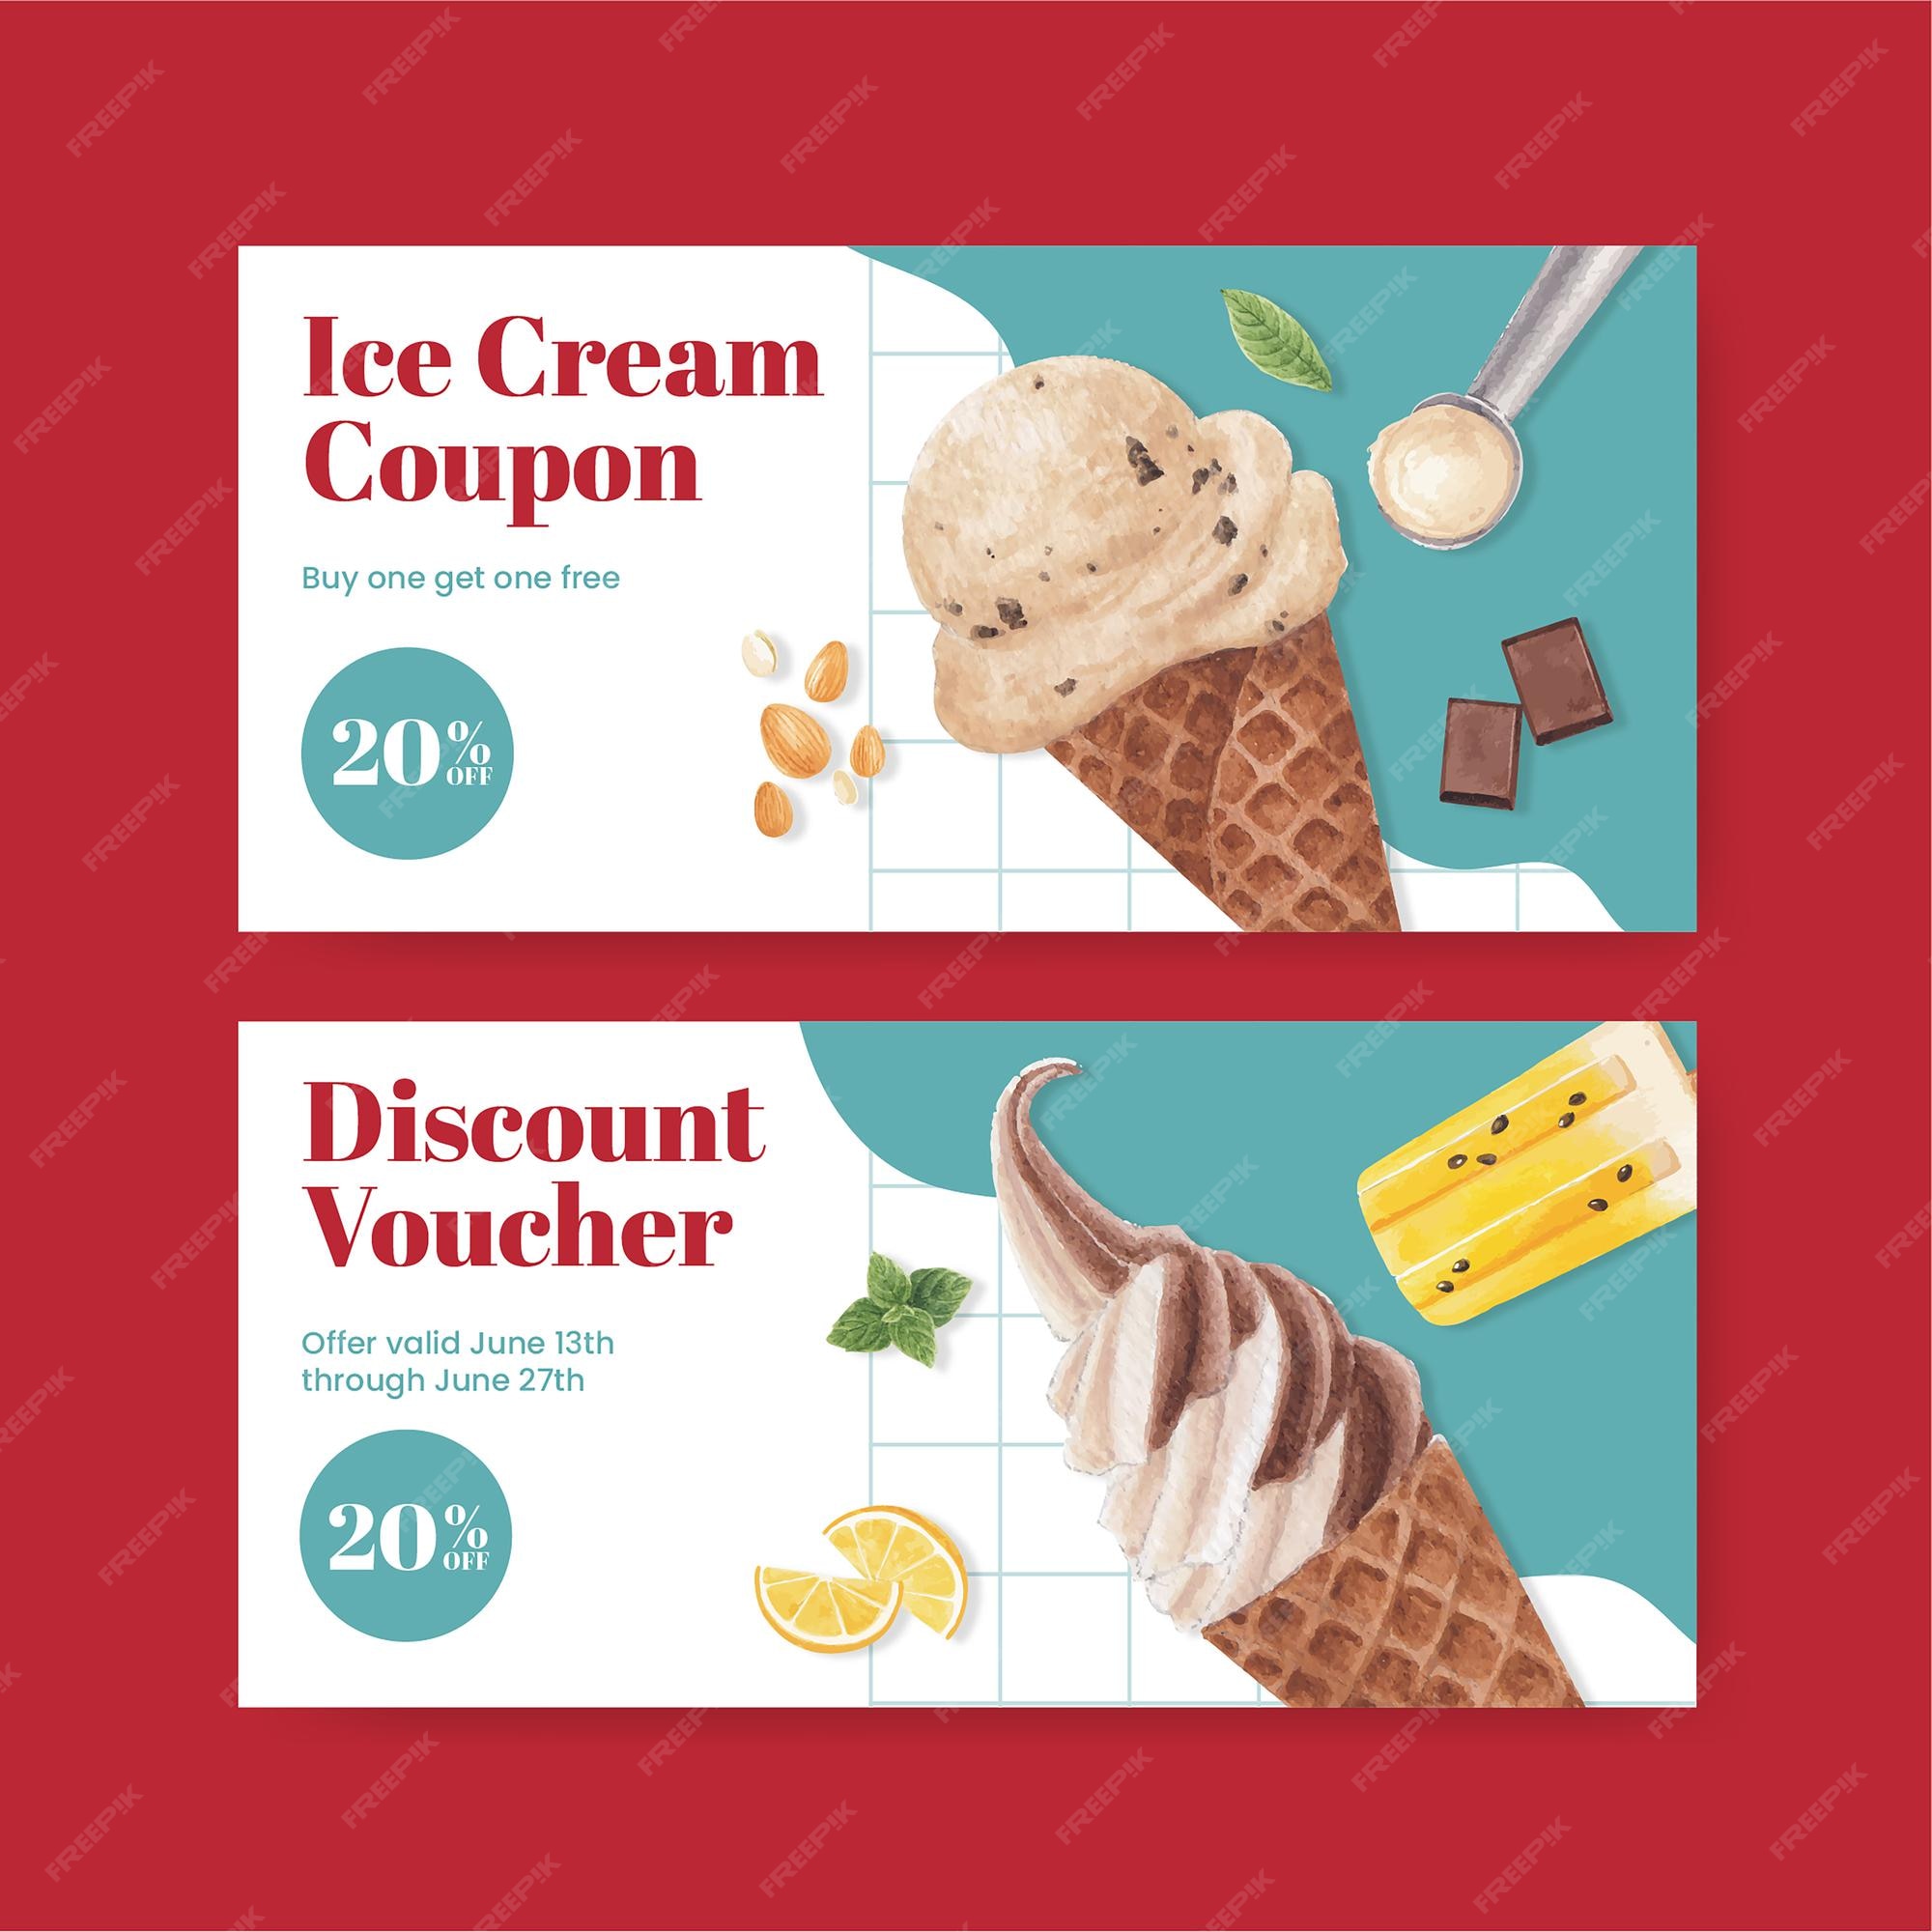 Premium Vector Voucher template with ice cream flavor concept